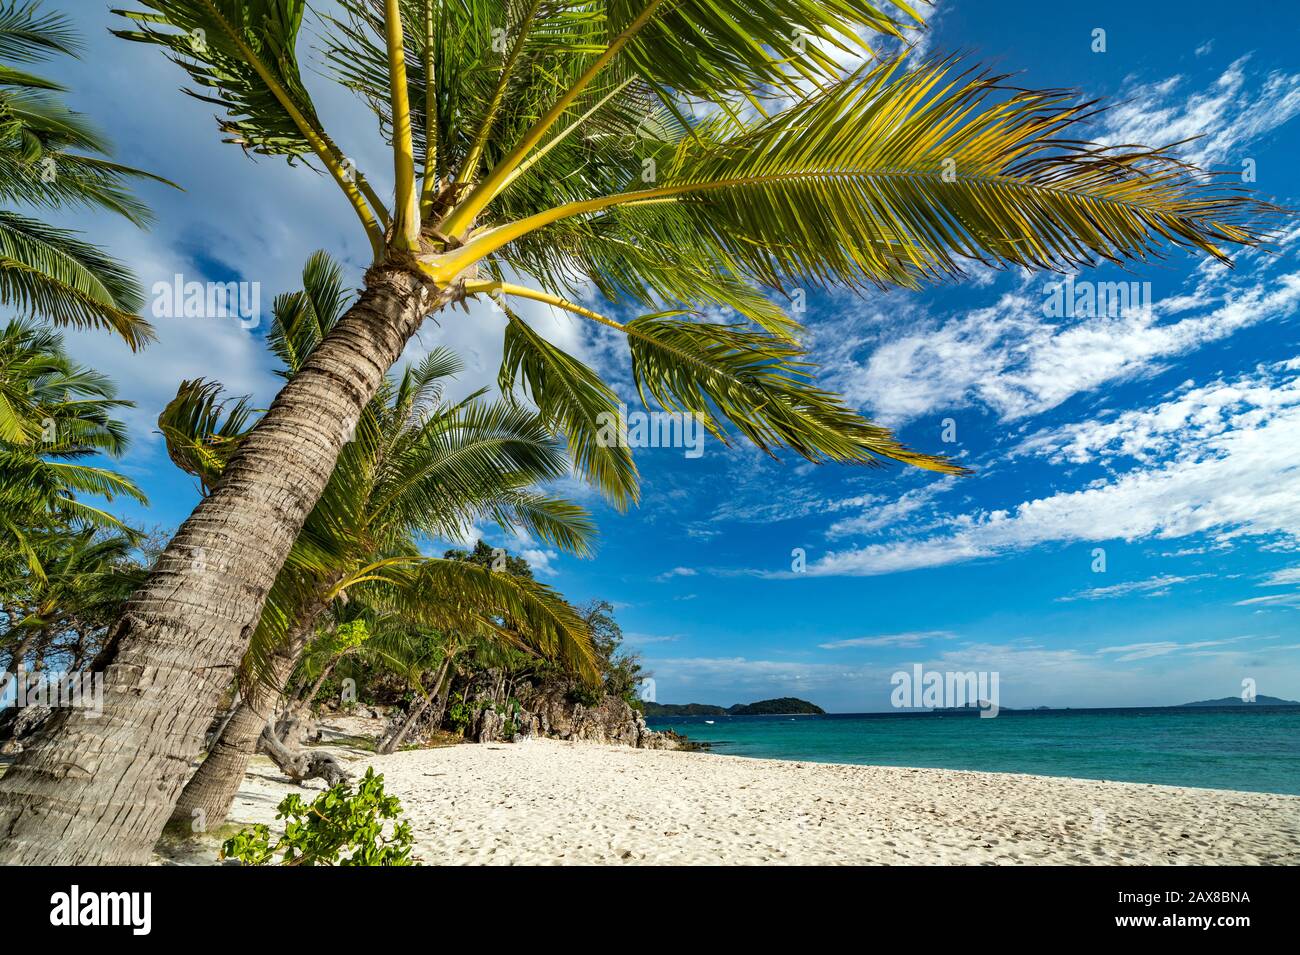 Banana Island in Coron, Philippines Stock Photo